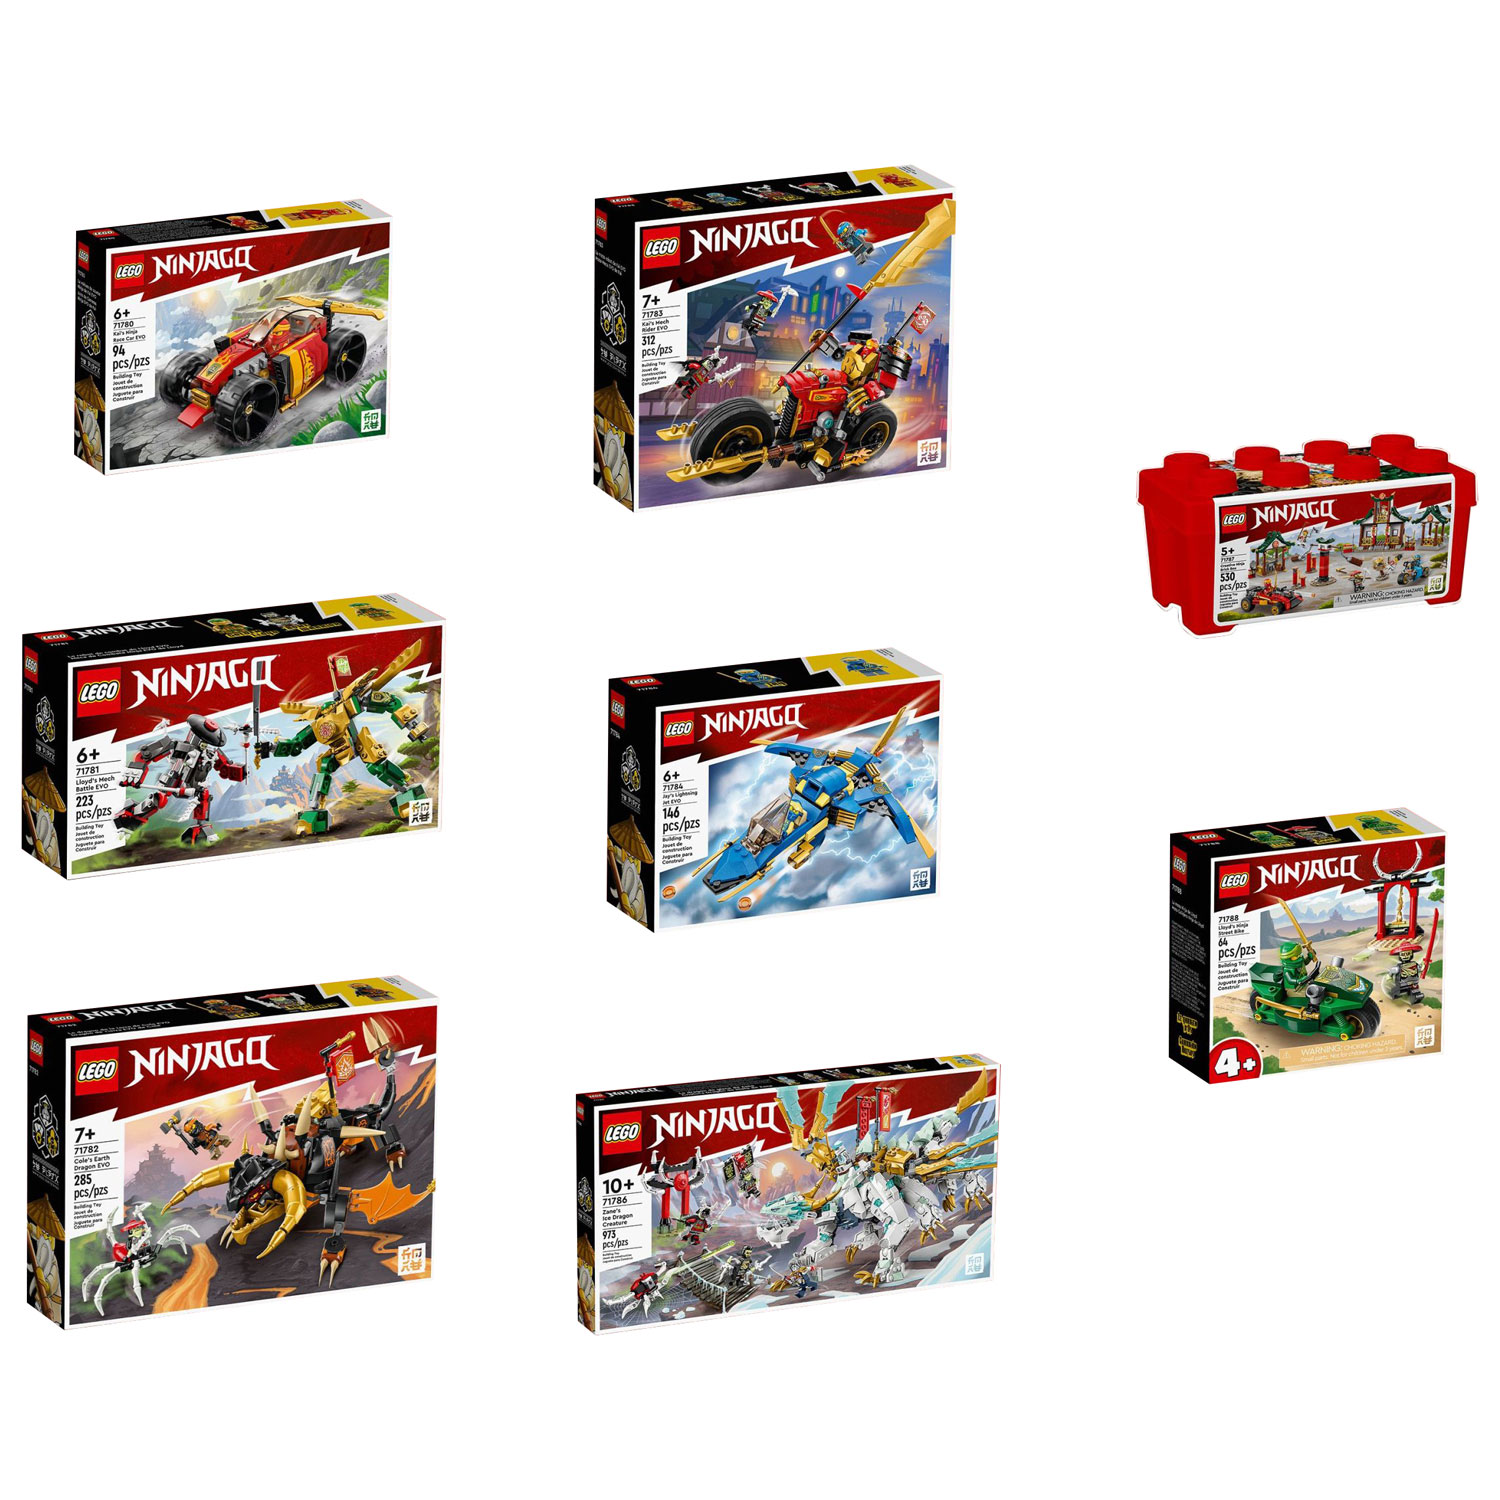 LEGO NINJAGO Jay’s Titan Mech 71785 Building Toy Set (794 Pieces)